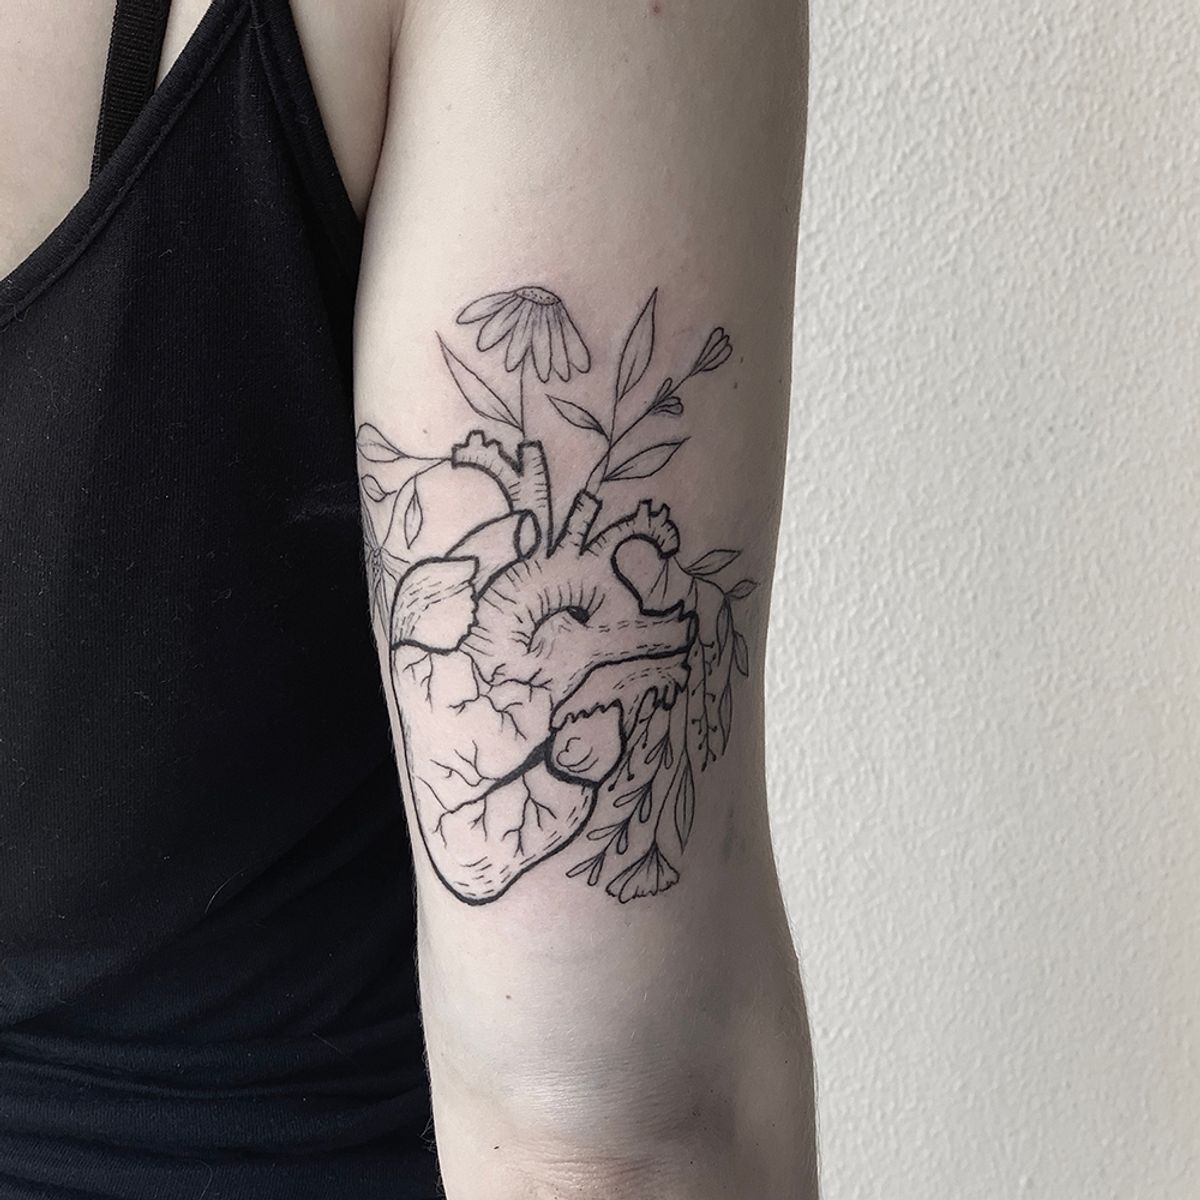 Tattoo uploaded by Julia Harger • Tattoodo